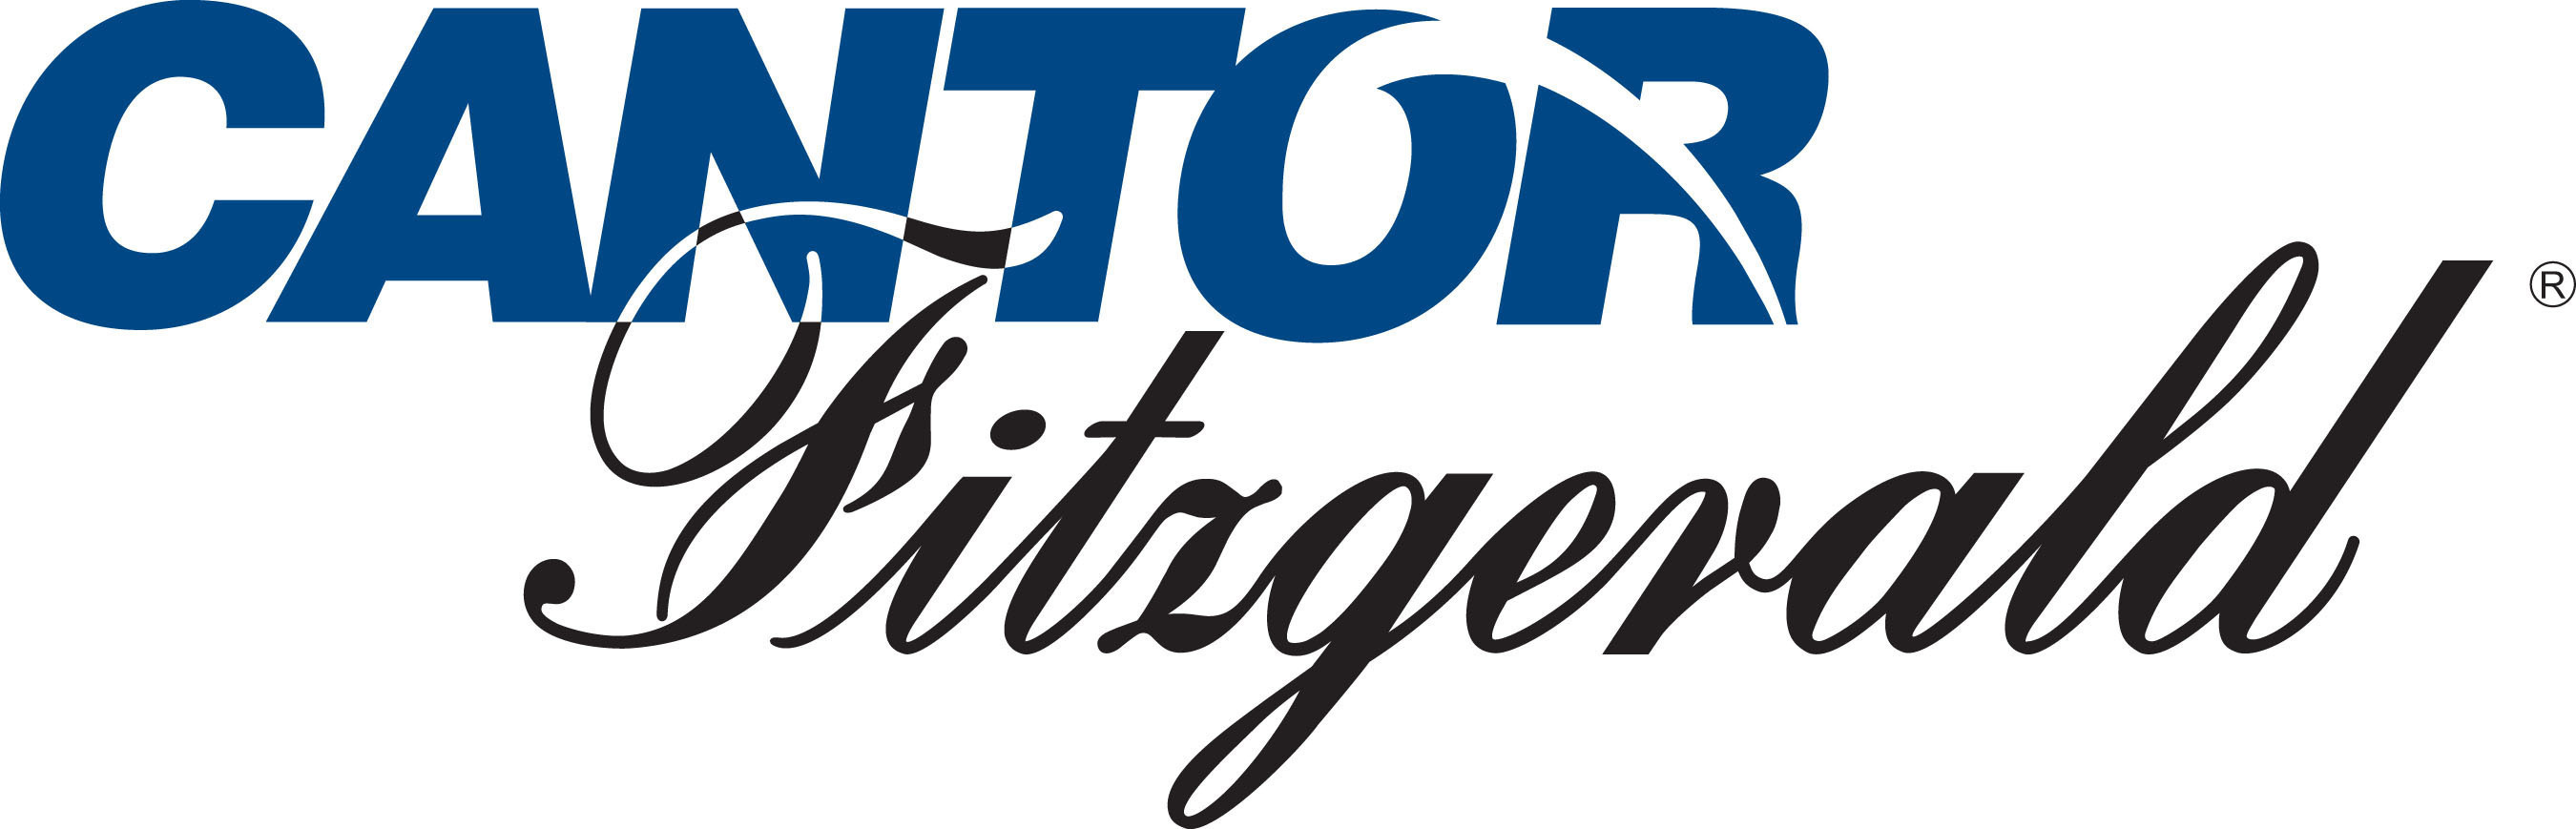 Cantor Fitzgerald Logo. (PRNewsFoto/Cantor Fitzgerald) (PRNewsFoto/)